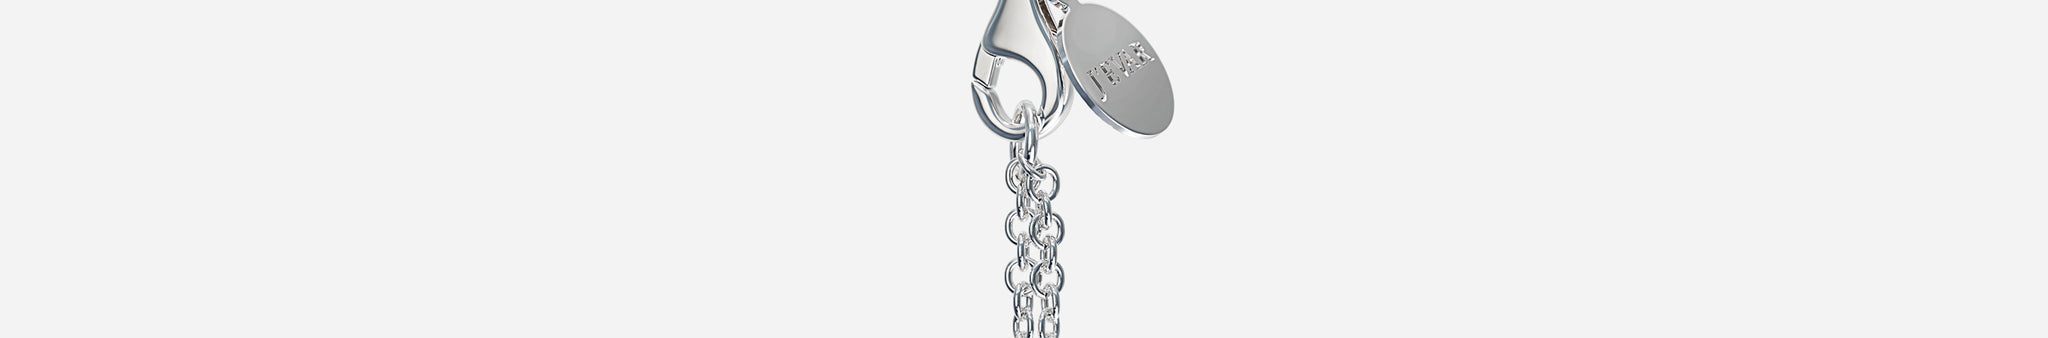 J'EVAR 14KT White Gold Solitaire ALTR Lab Grown Diamond Necklace Lock View